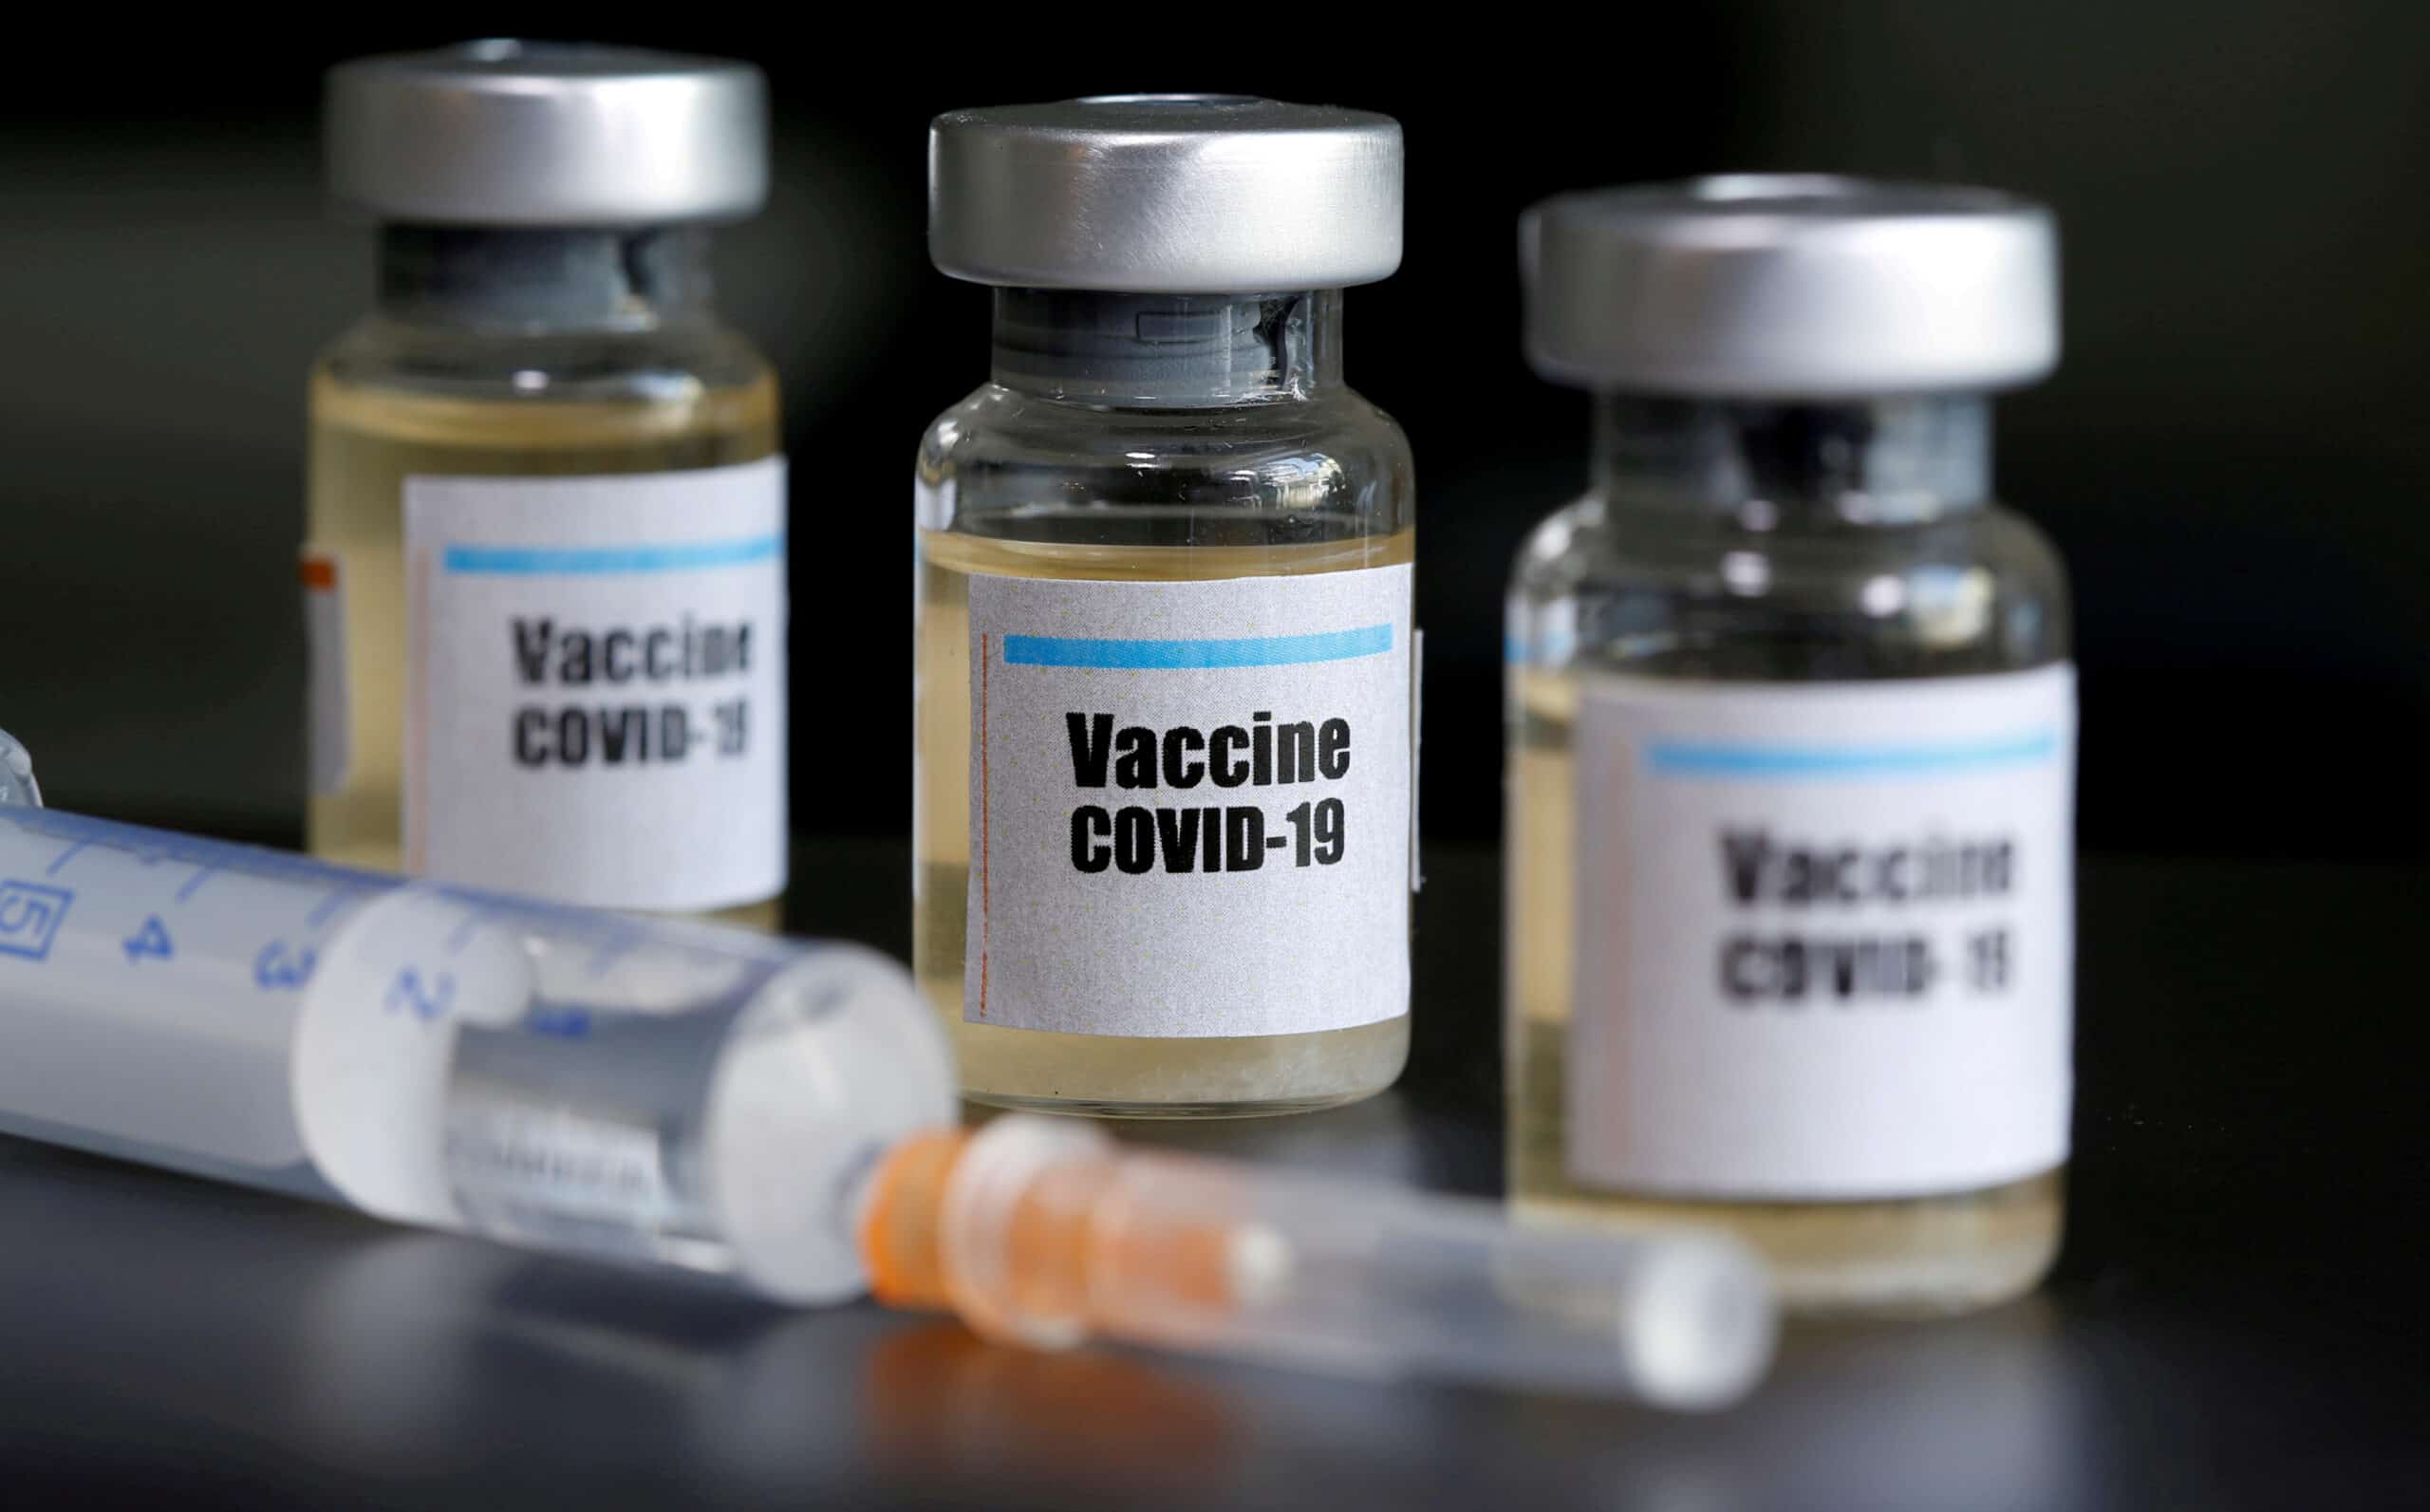 Vacina contra Covid-19 vai custar R$1,9 MIL? Seguro diz que sim e Procon-SP reage (Imagem: Google)